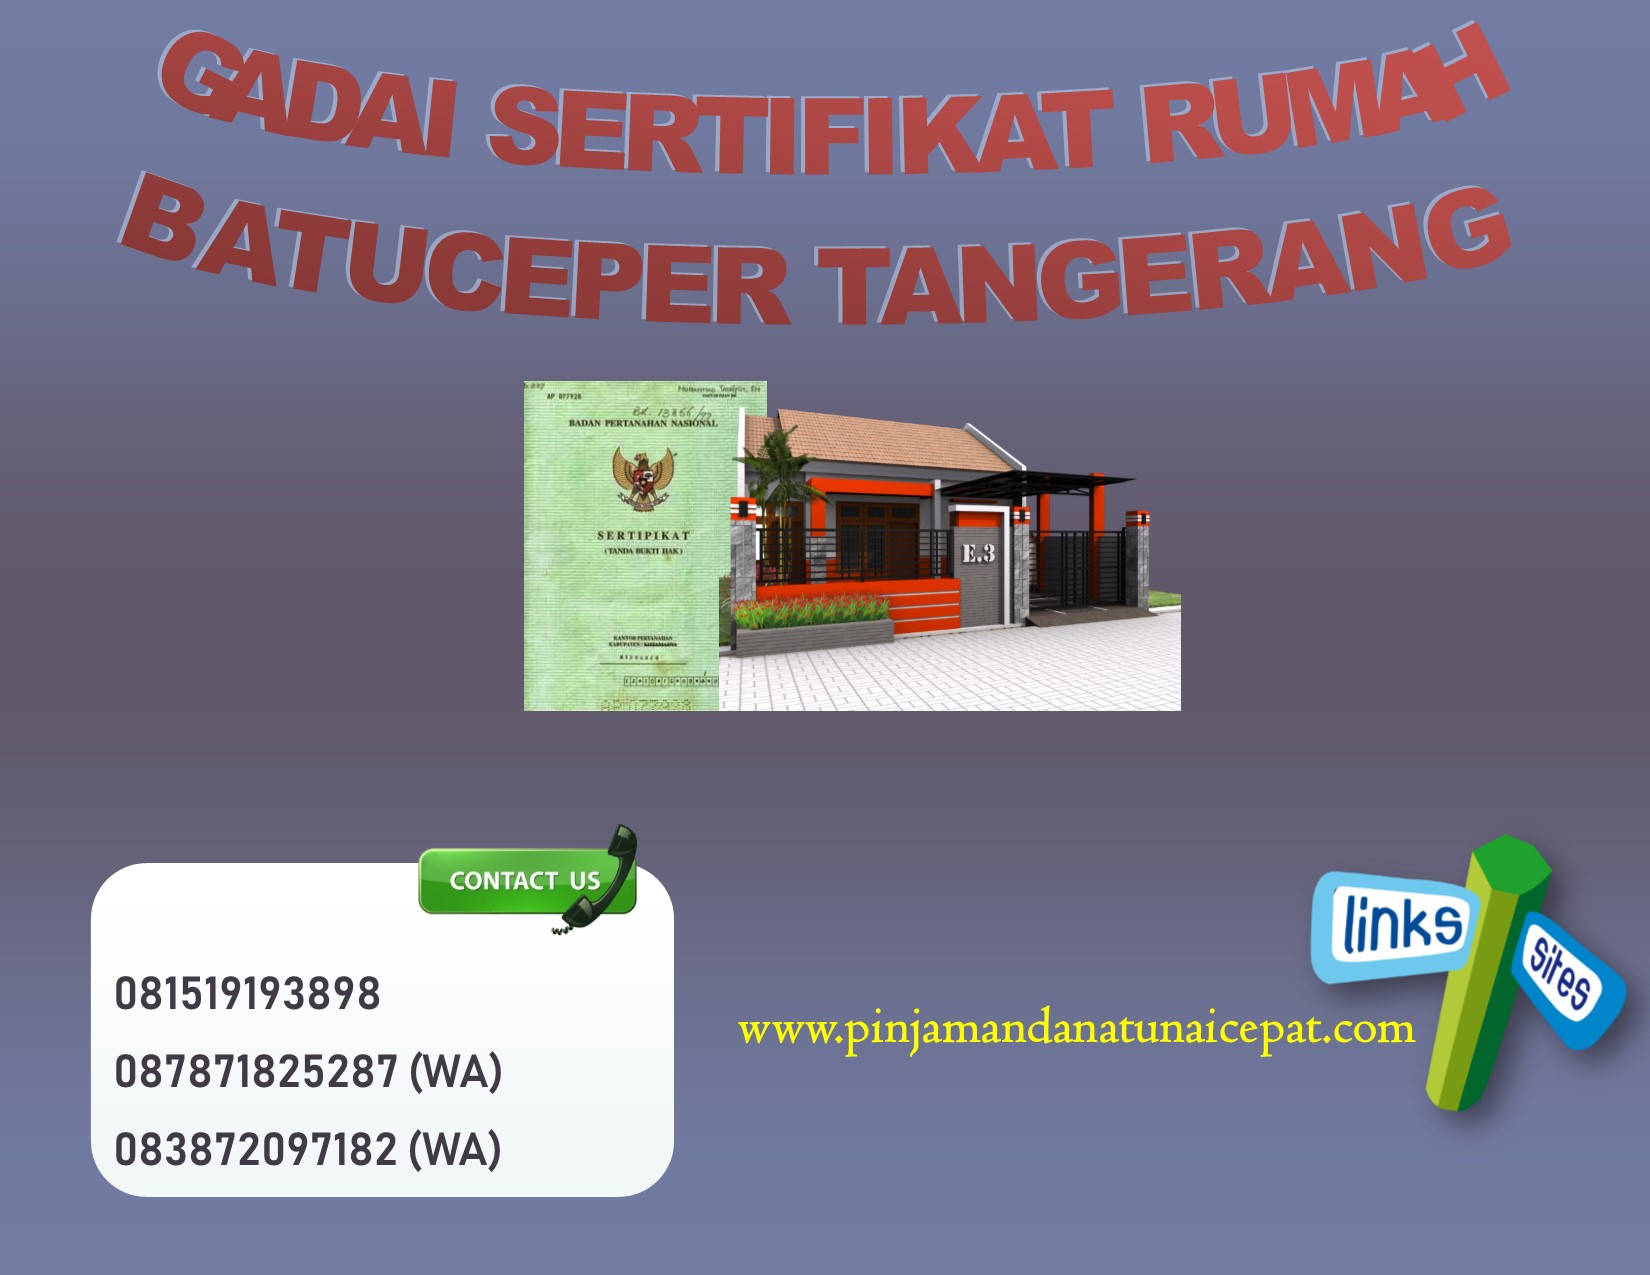 Gadai Sertifikat Rumah Daerah Batuceper Tangerang